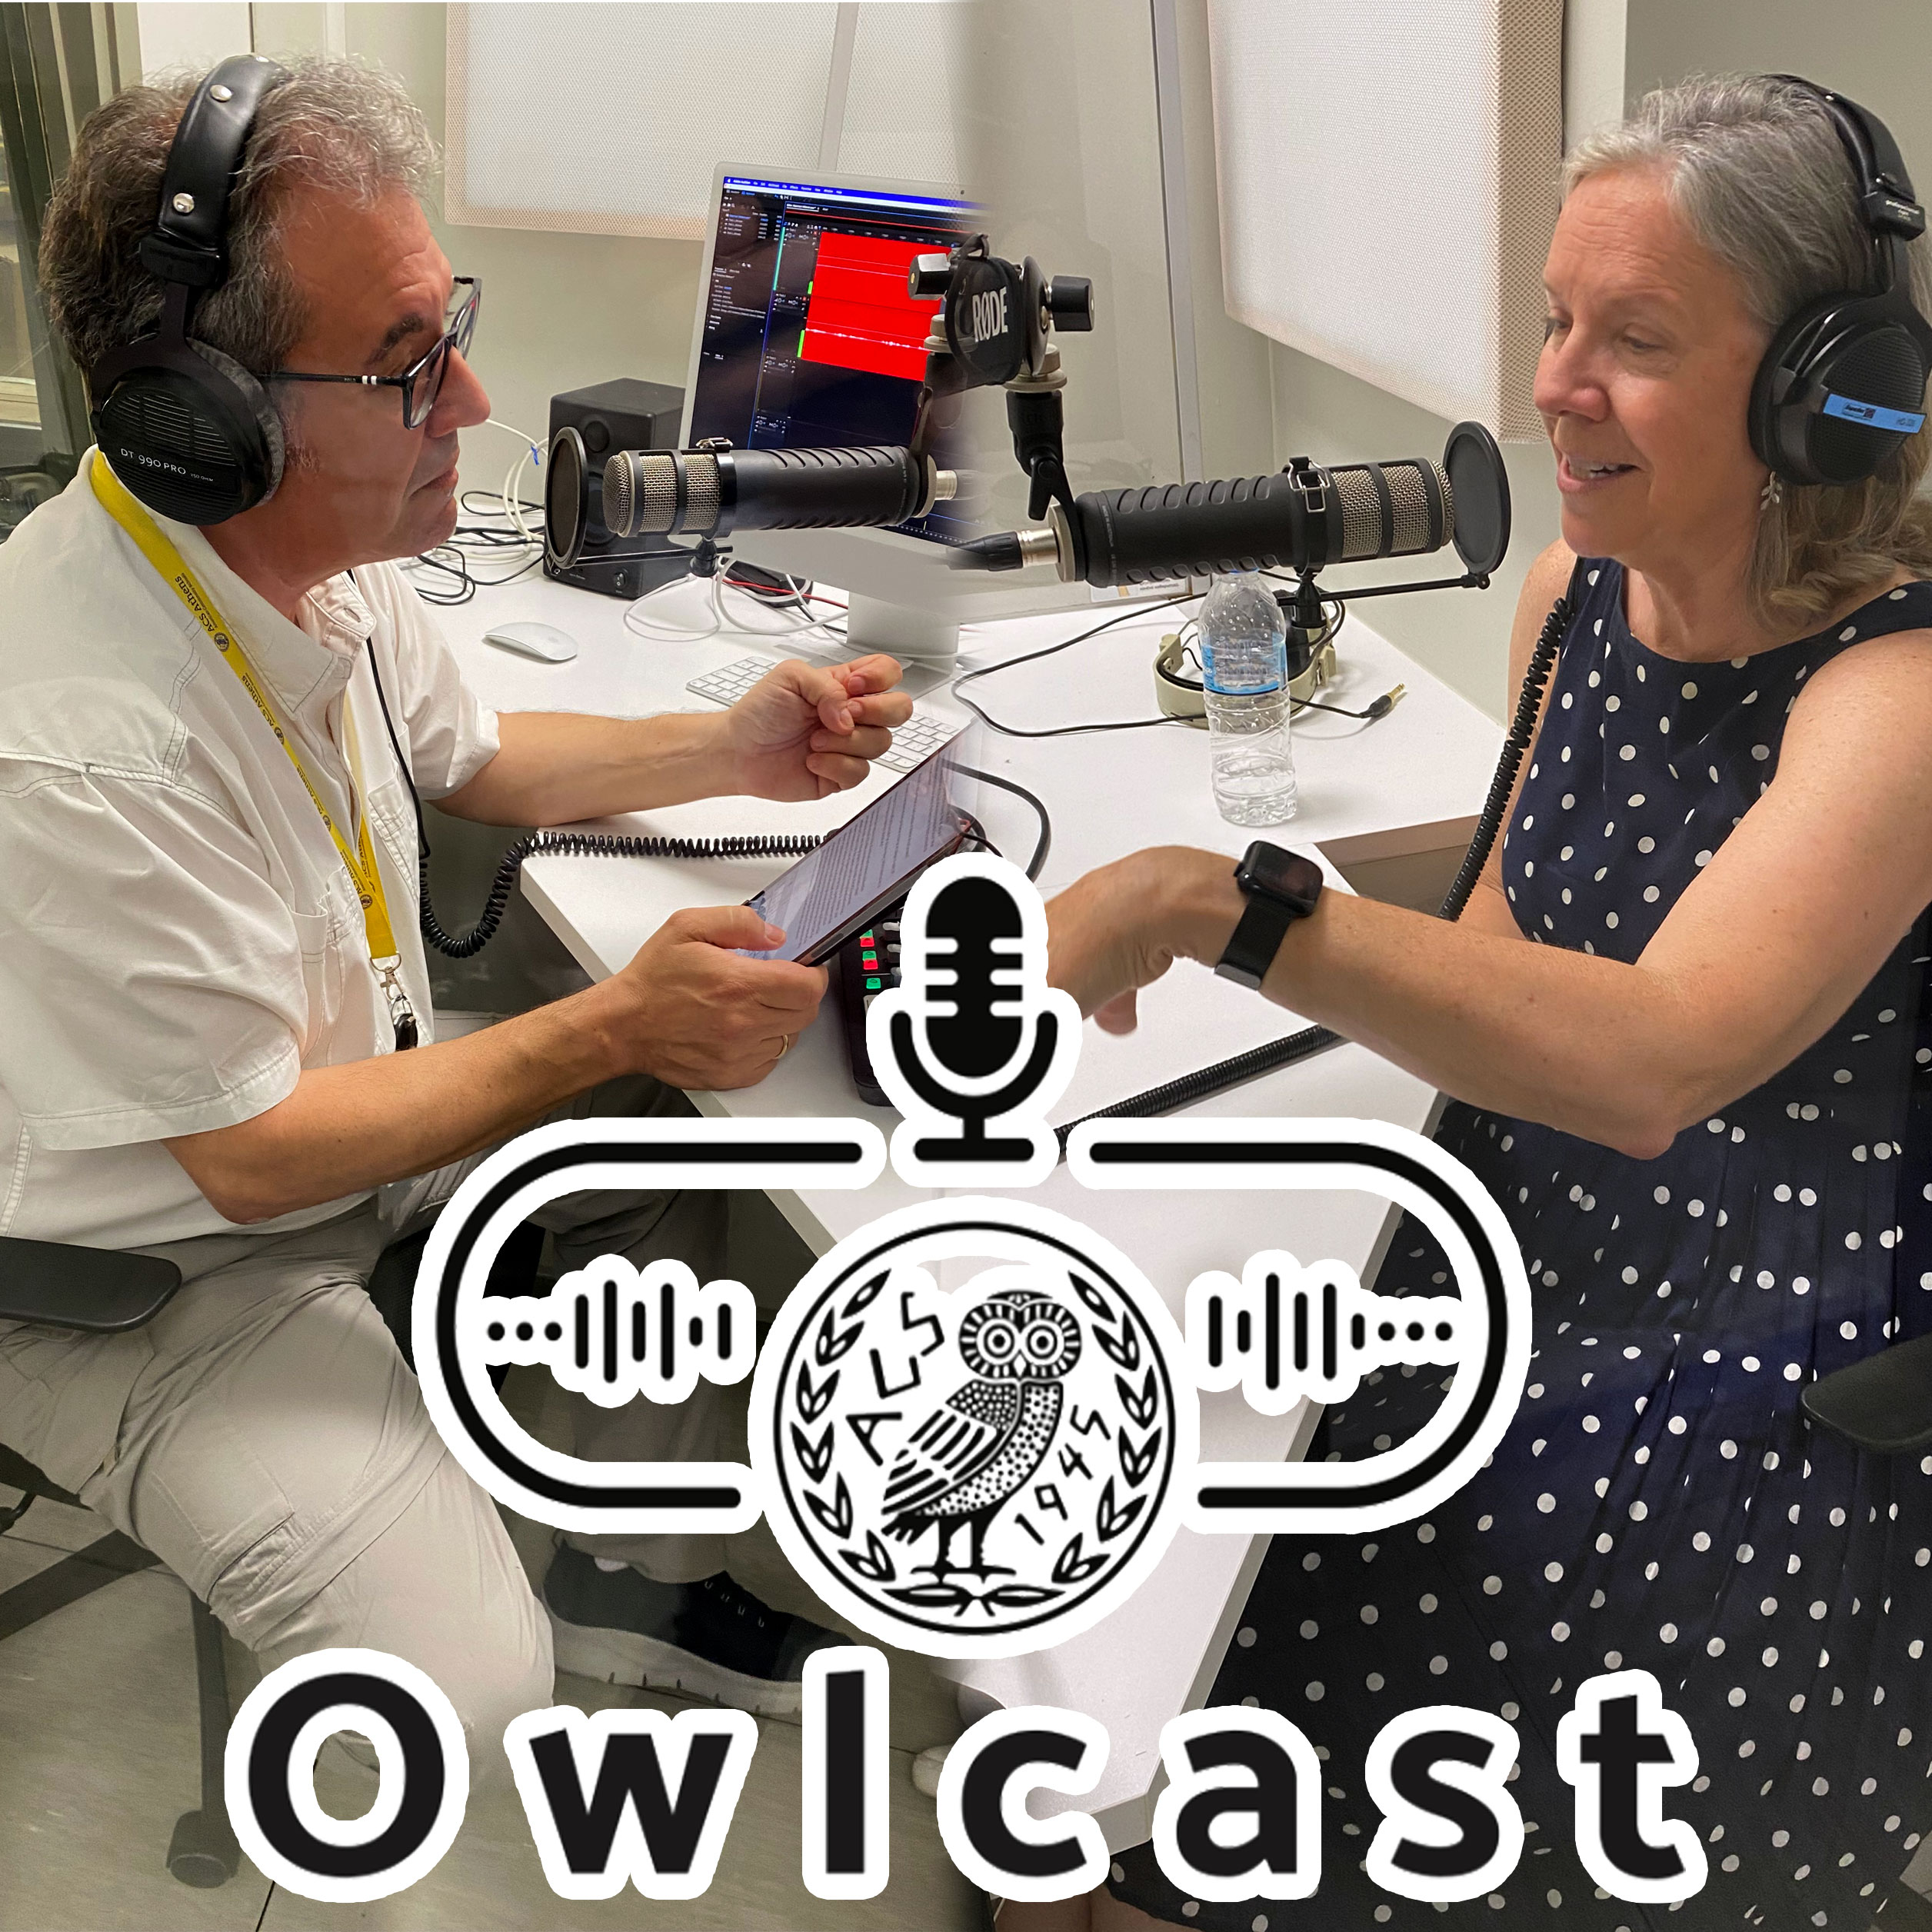 Owlcast 63 - with the President of Widener University